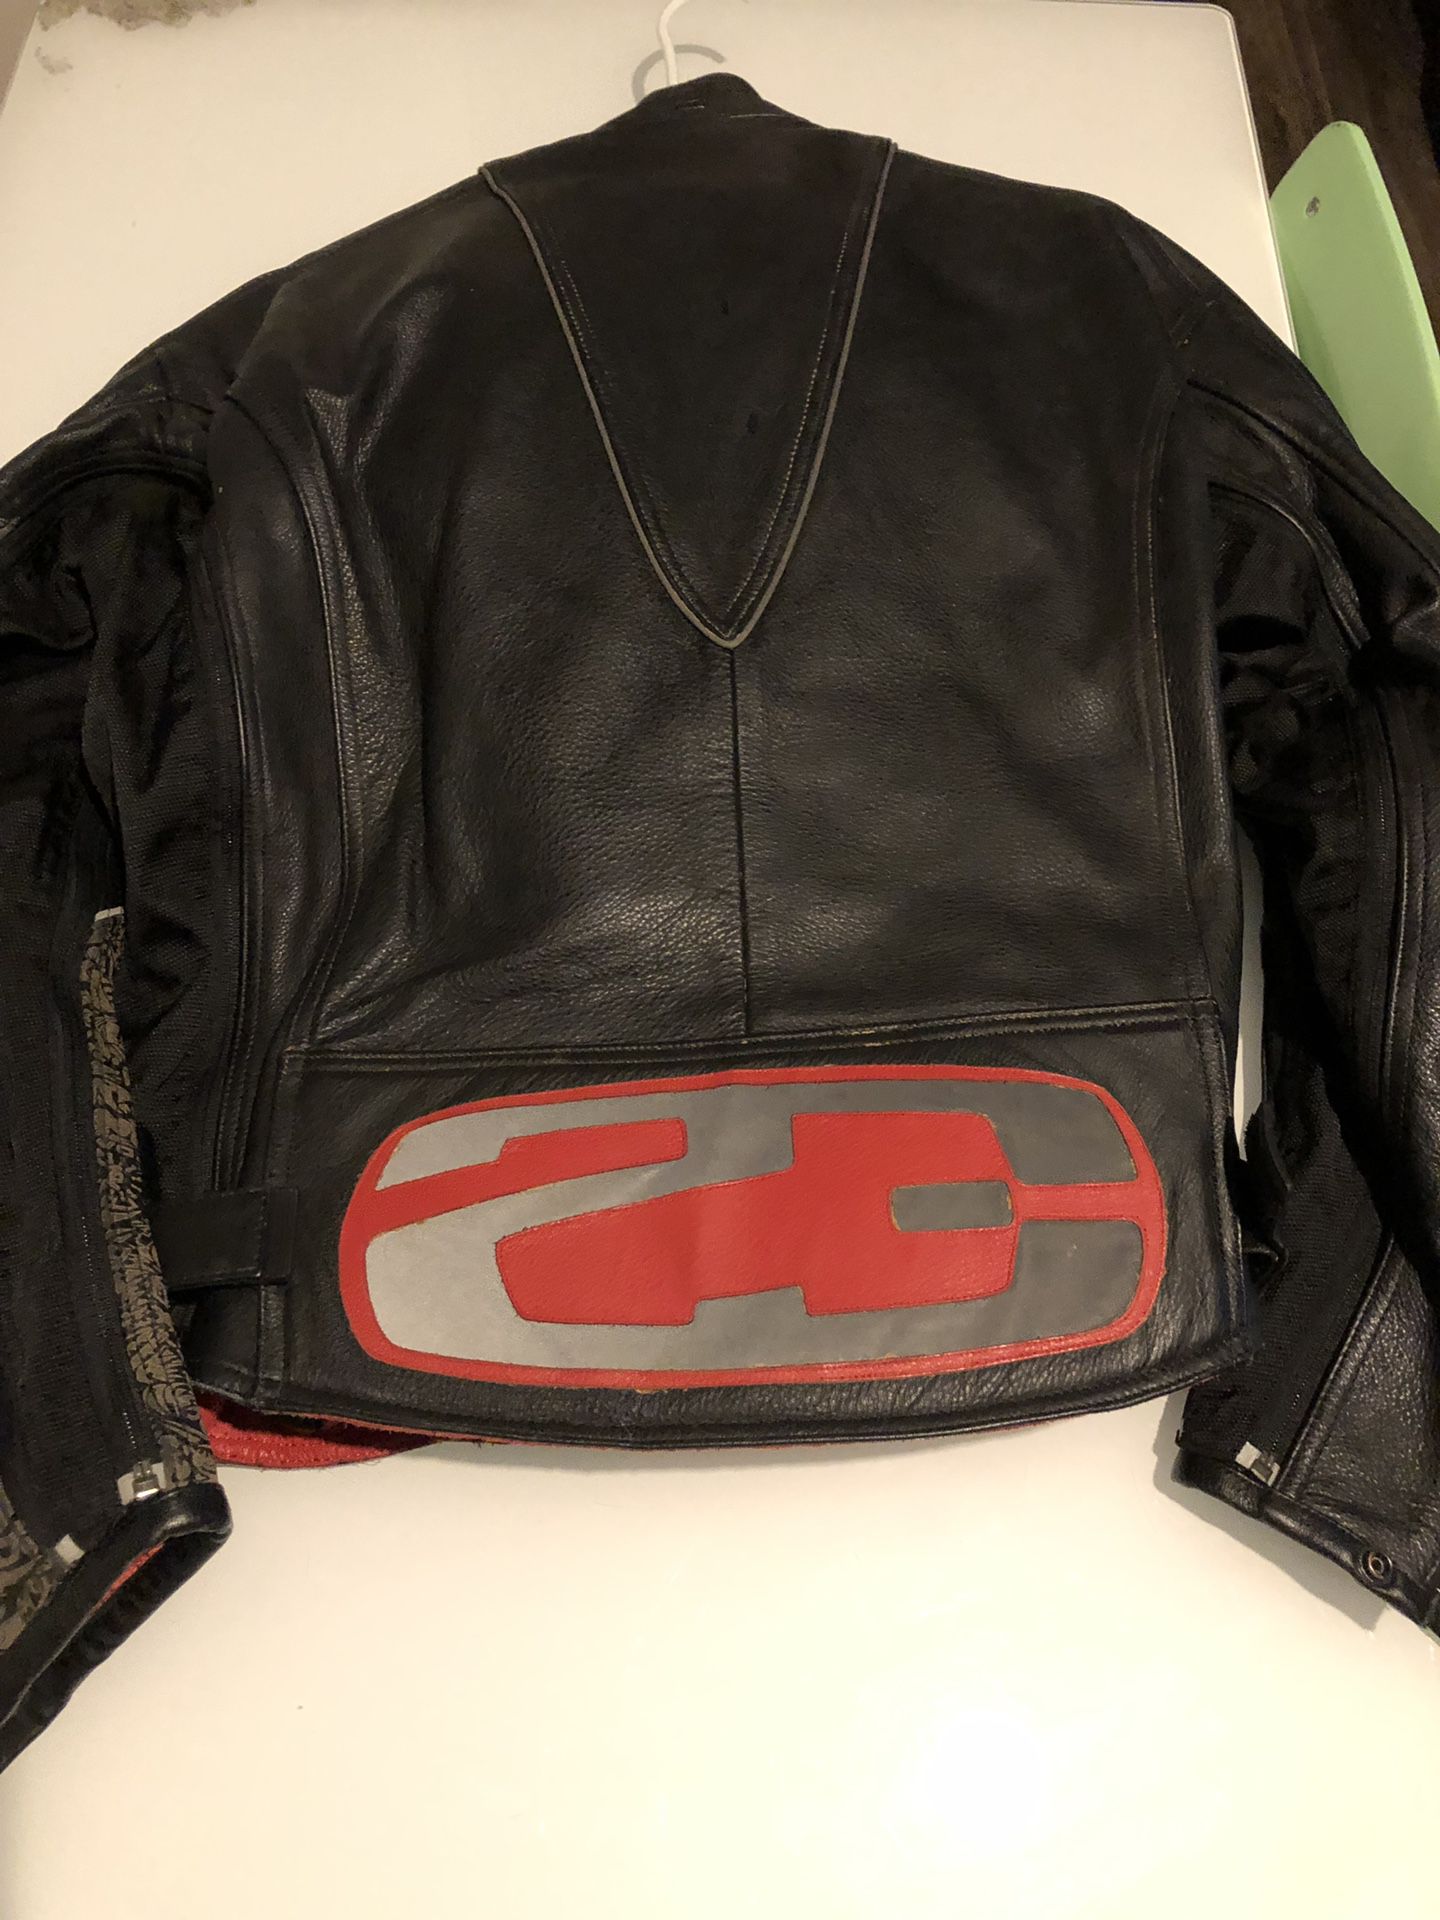 Jordan motorcycle jacket size 46